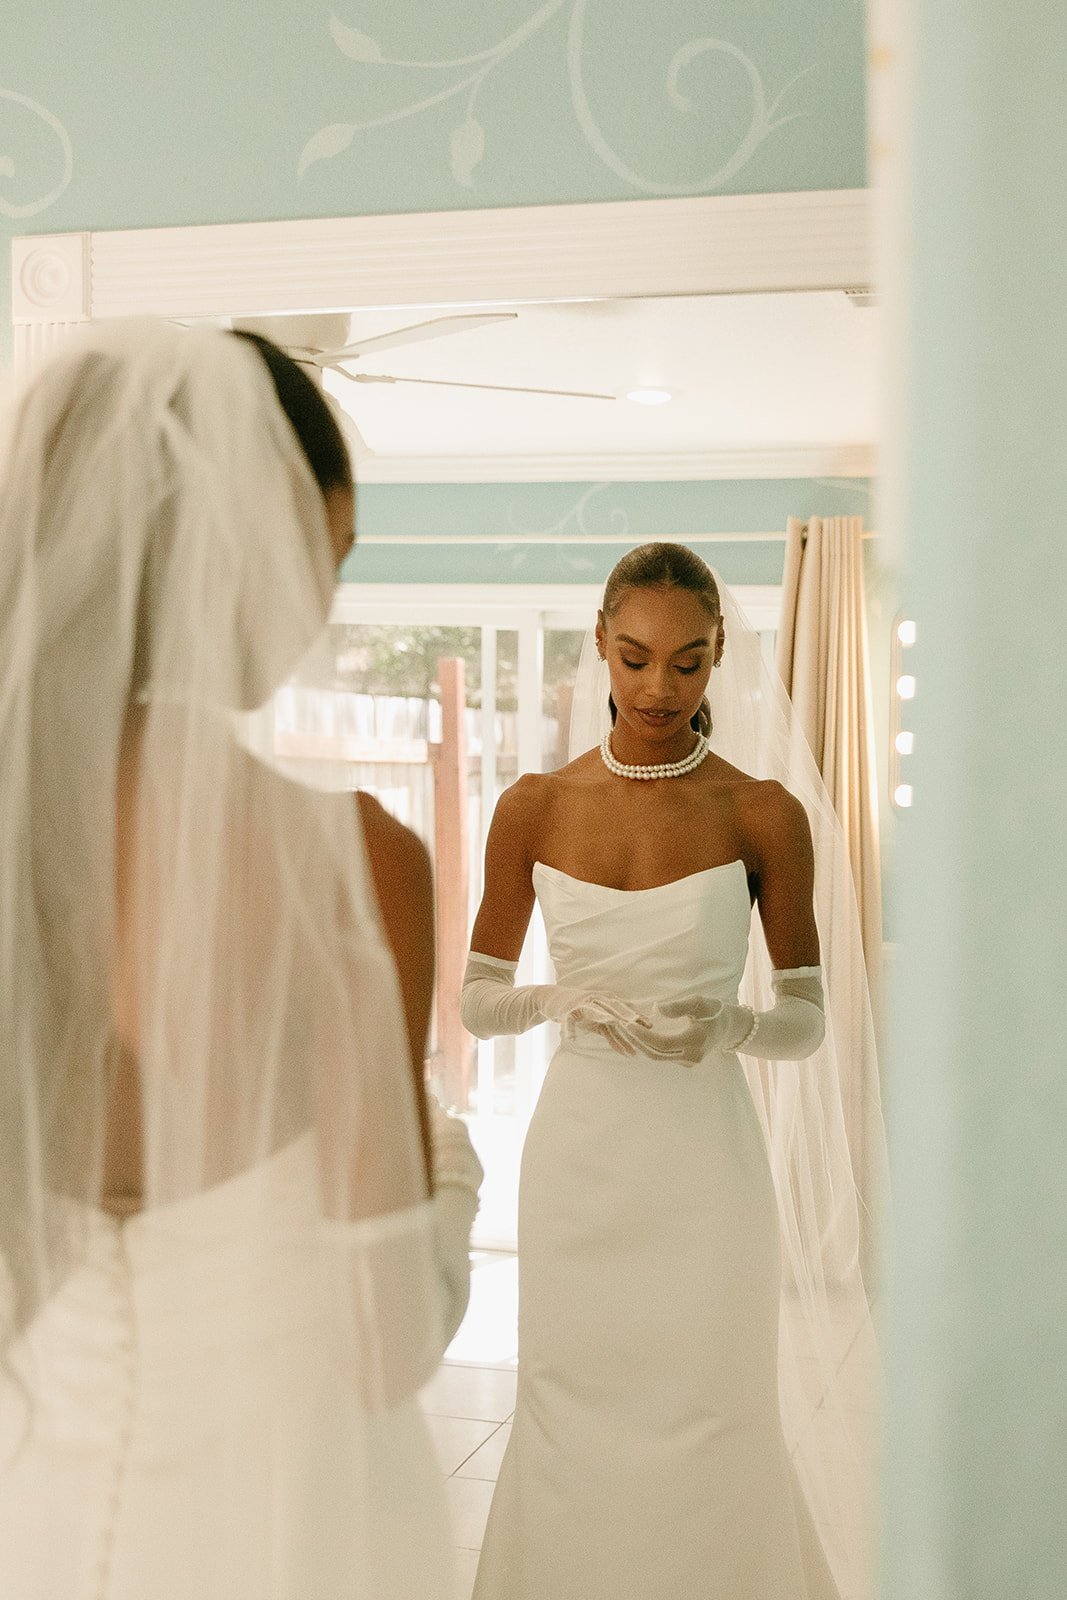 Bride getting ready in a strapless wedding dress